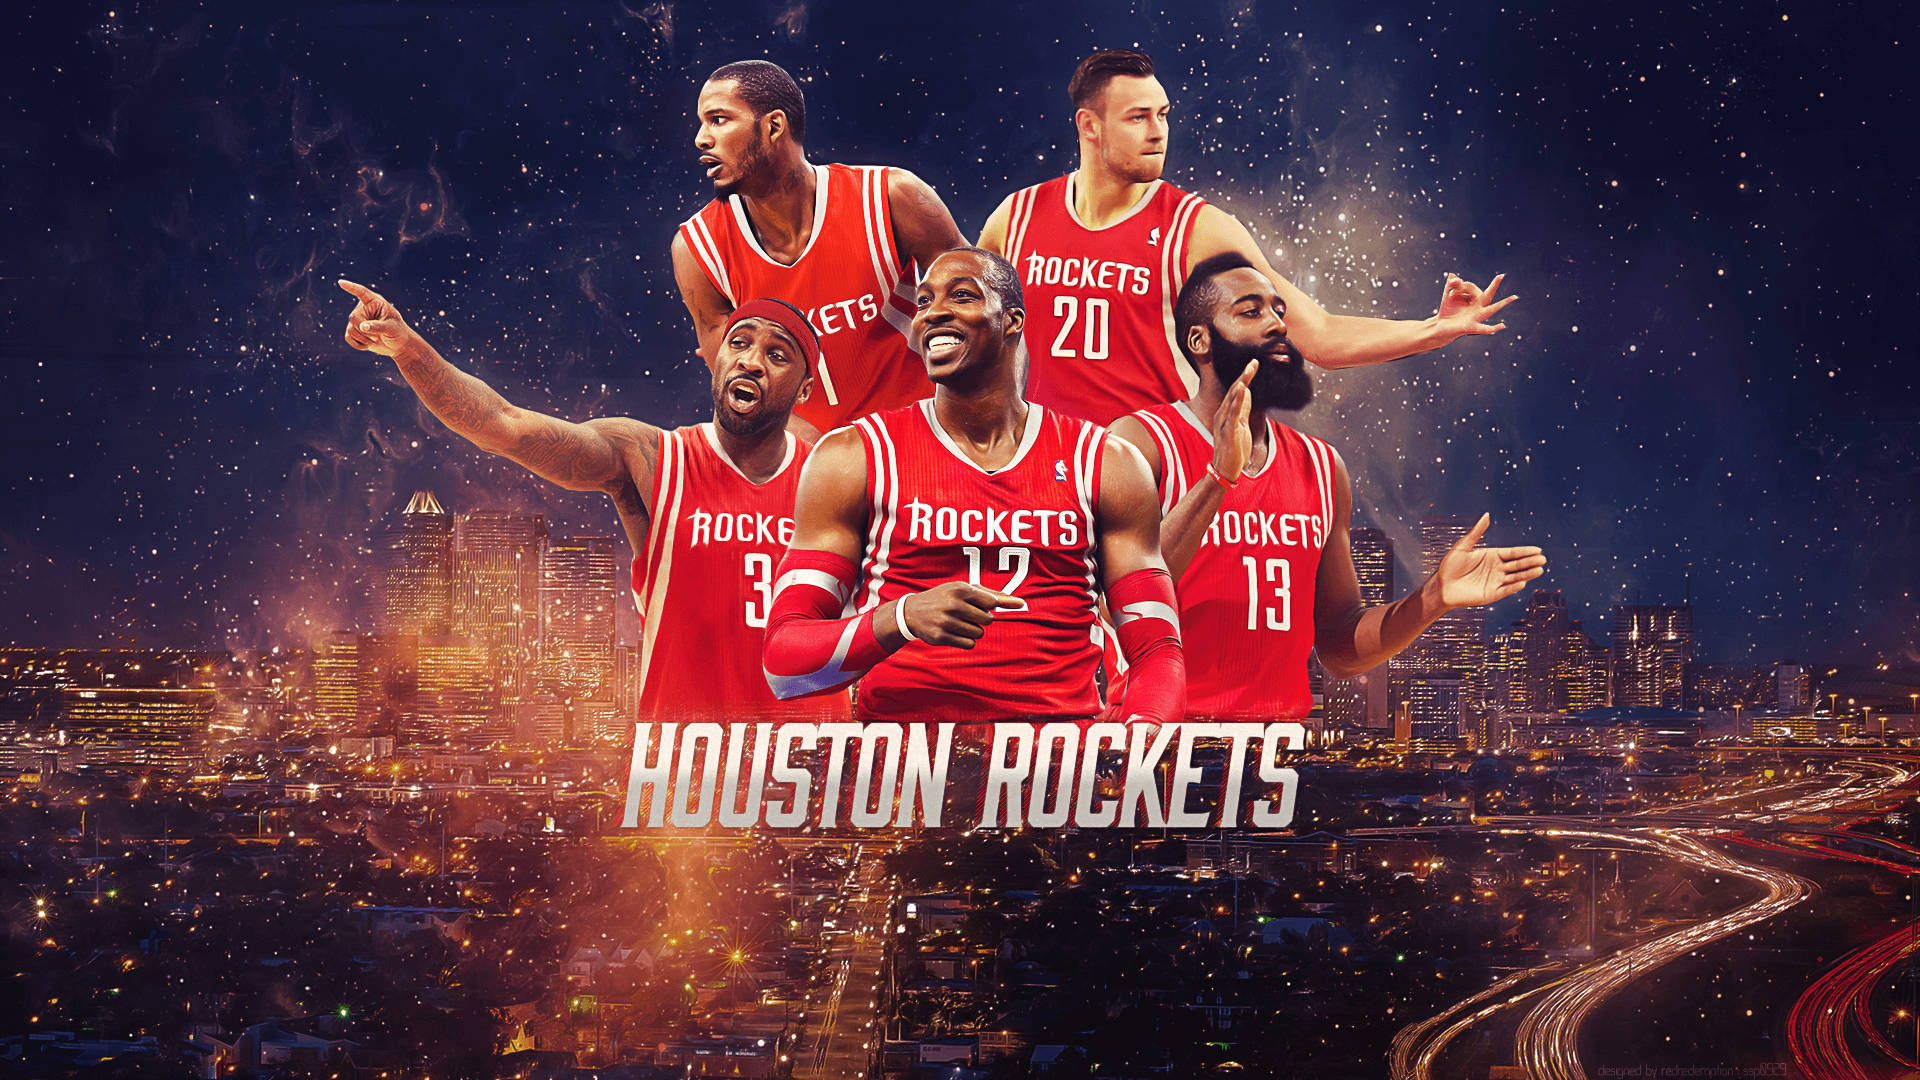 Houston Rockets Basketball Team